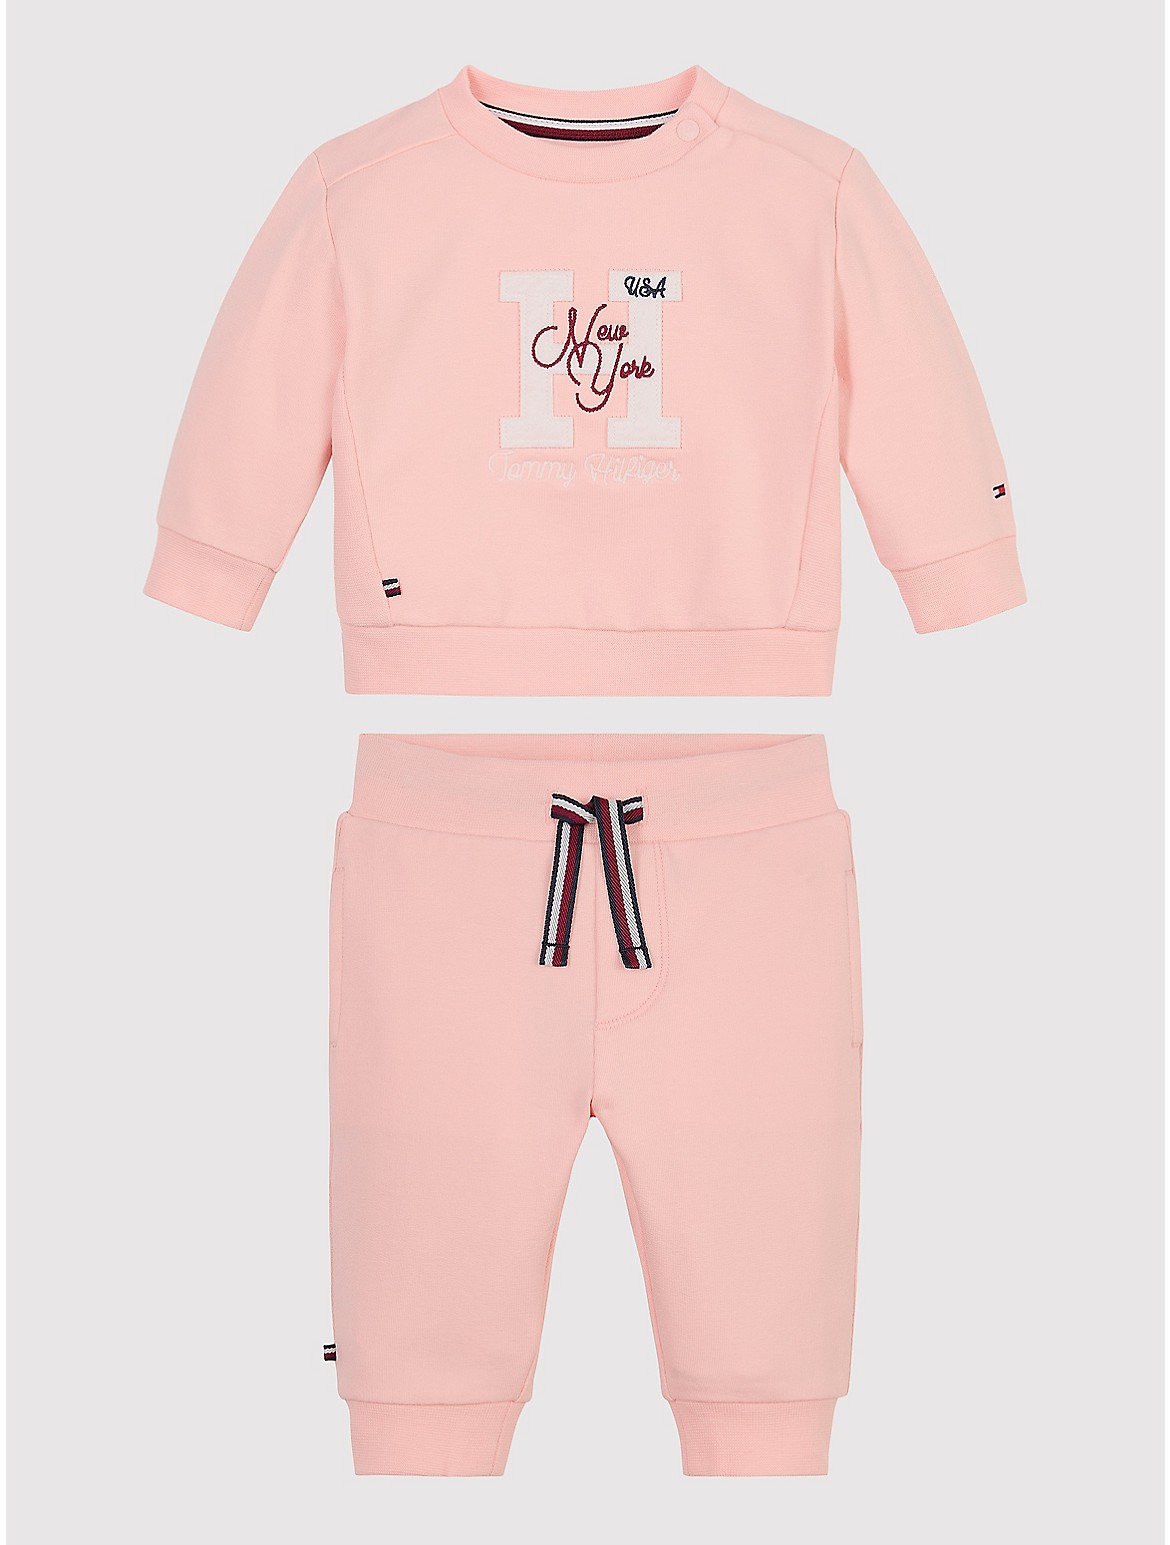 Tommy Hilfiger Babies' Blame The Cat Sweatsuit Set - Pink - 9M